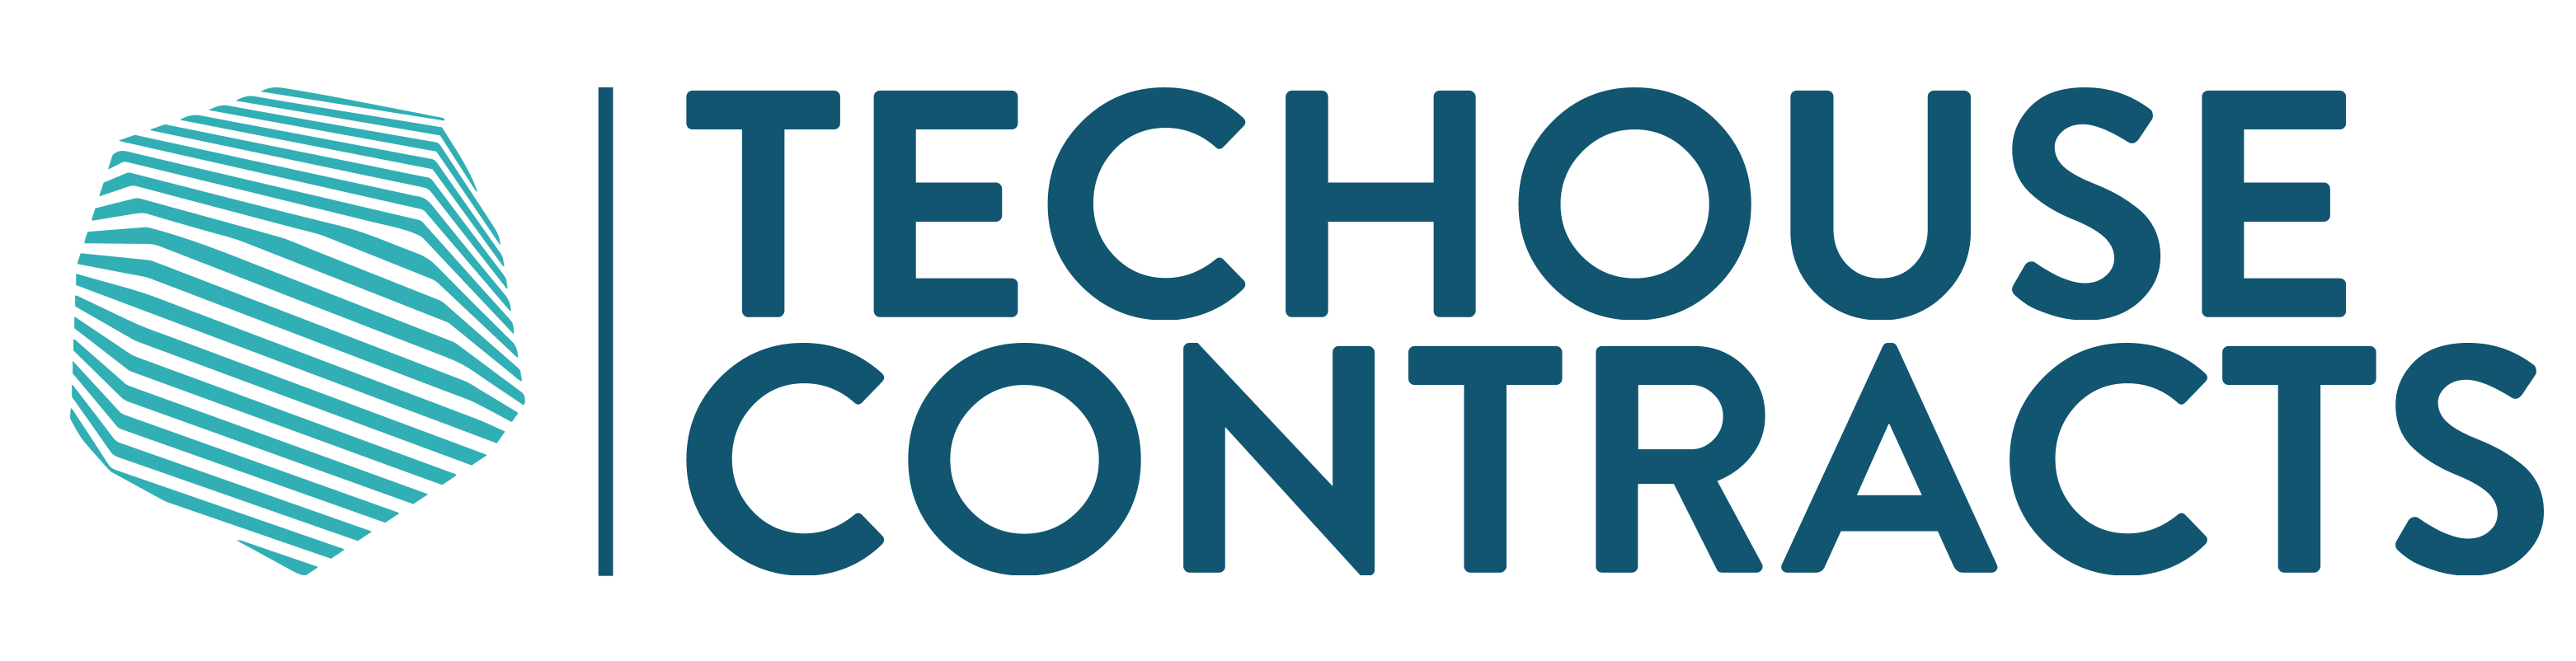 Techouse Contracts Logo